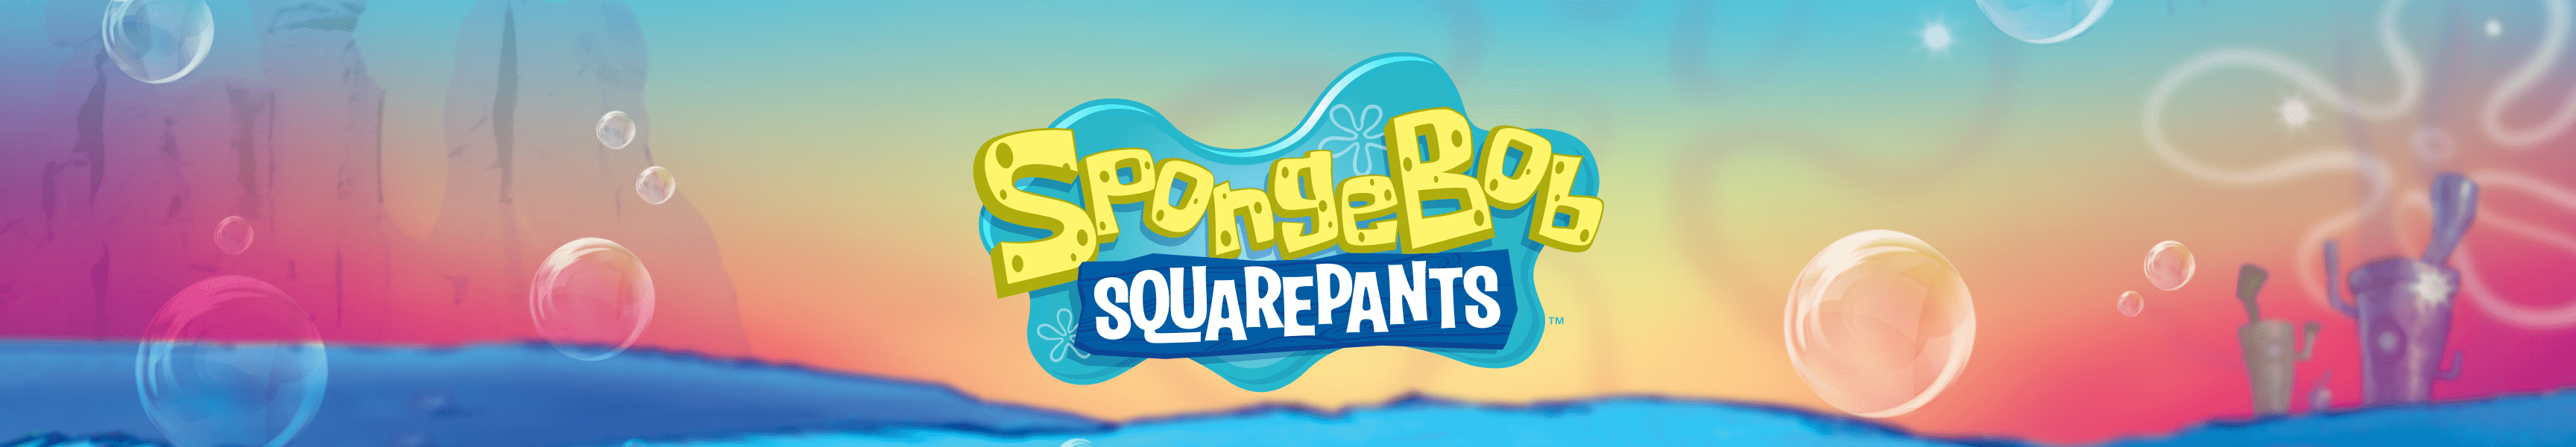 SpongeBob SquarePants SpongeBob